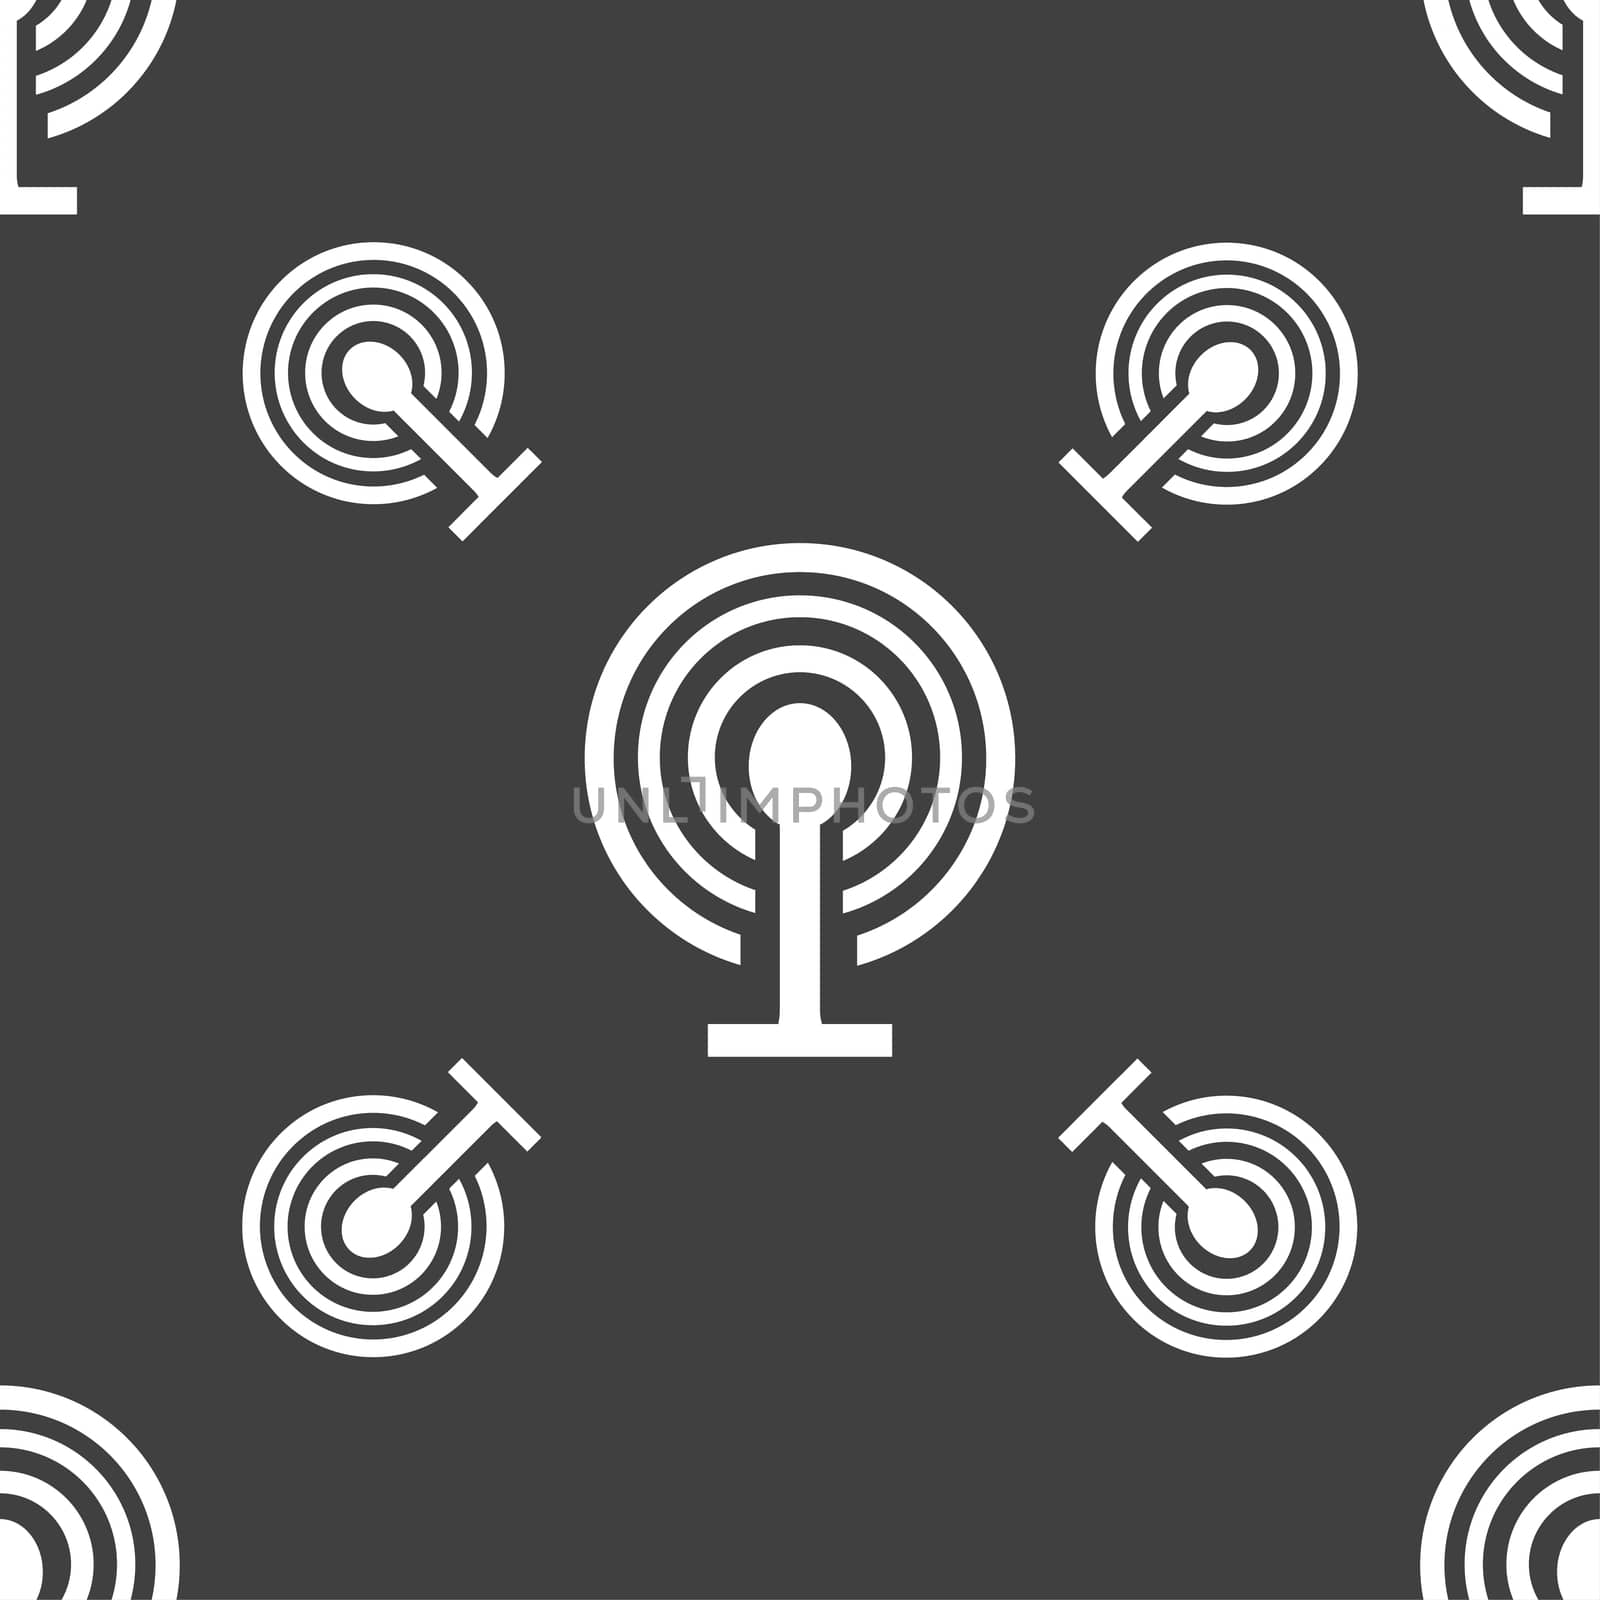 Wifi sign. Wi-fi symbol. Wireless Network icon zone. Seamless pattern on a gray background. illustration